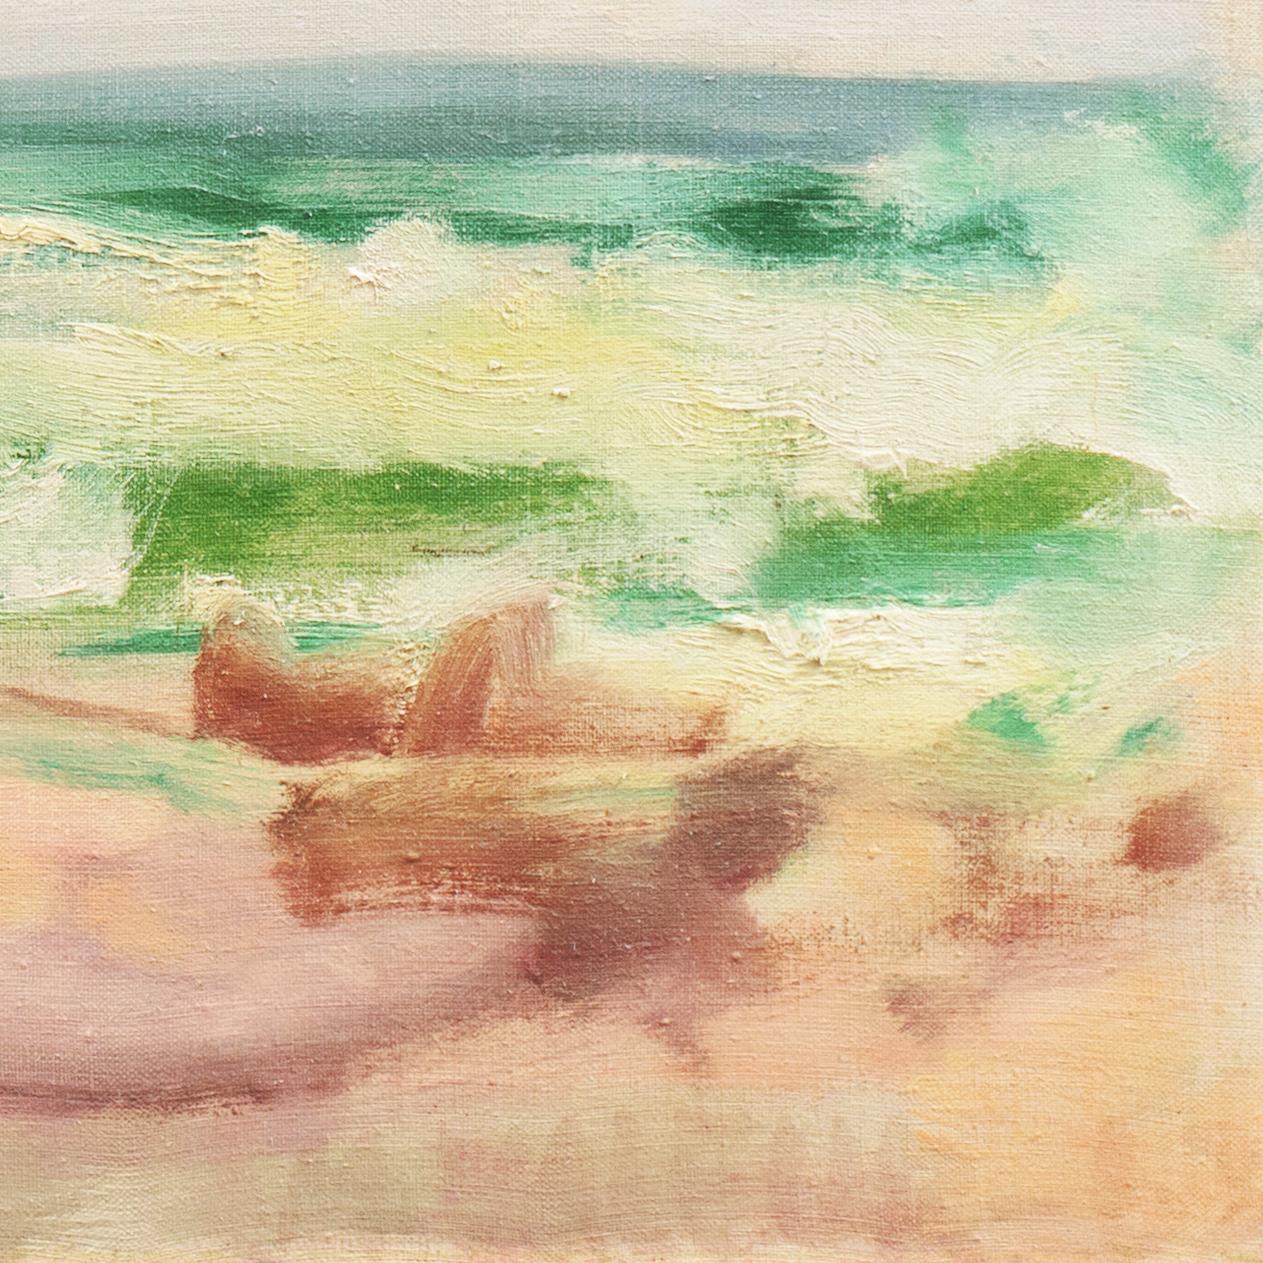 'Ocean Breakers at Sunset', Copenhagen Royal Academy, Charlottenborg Institute  - Painting by Mogens Valeur